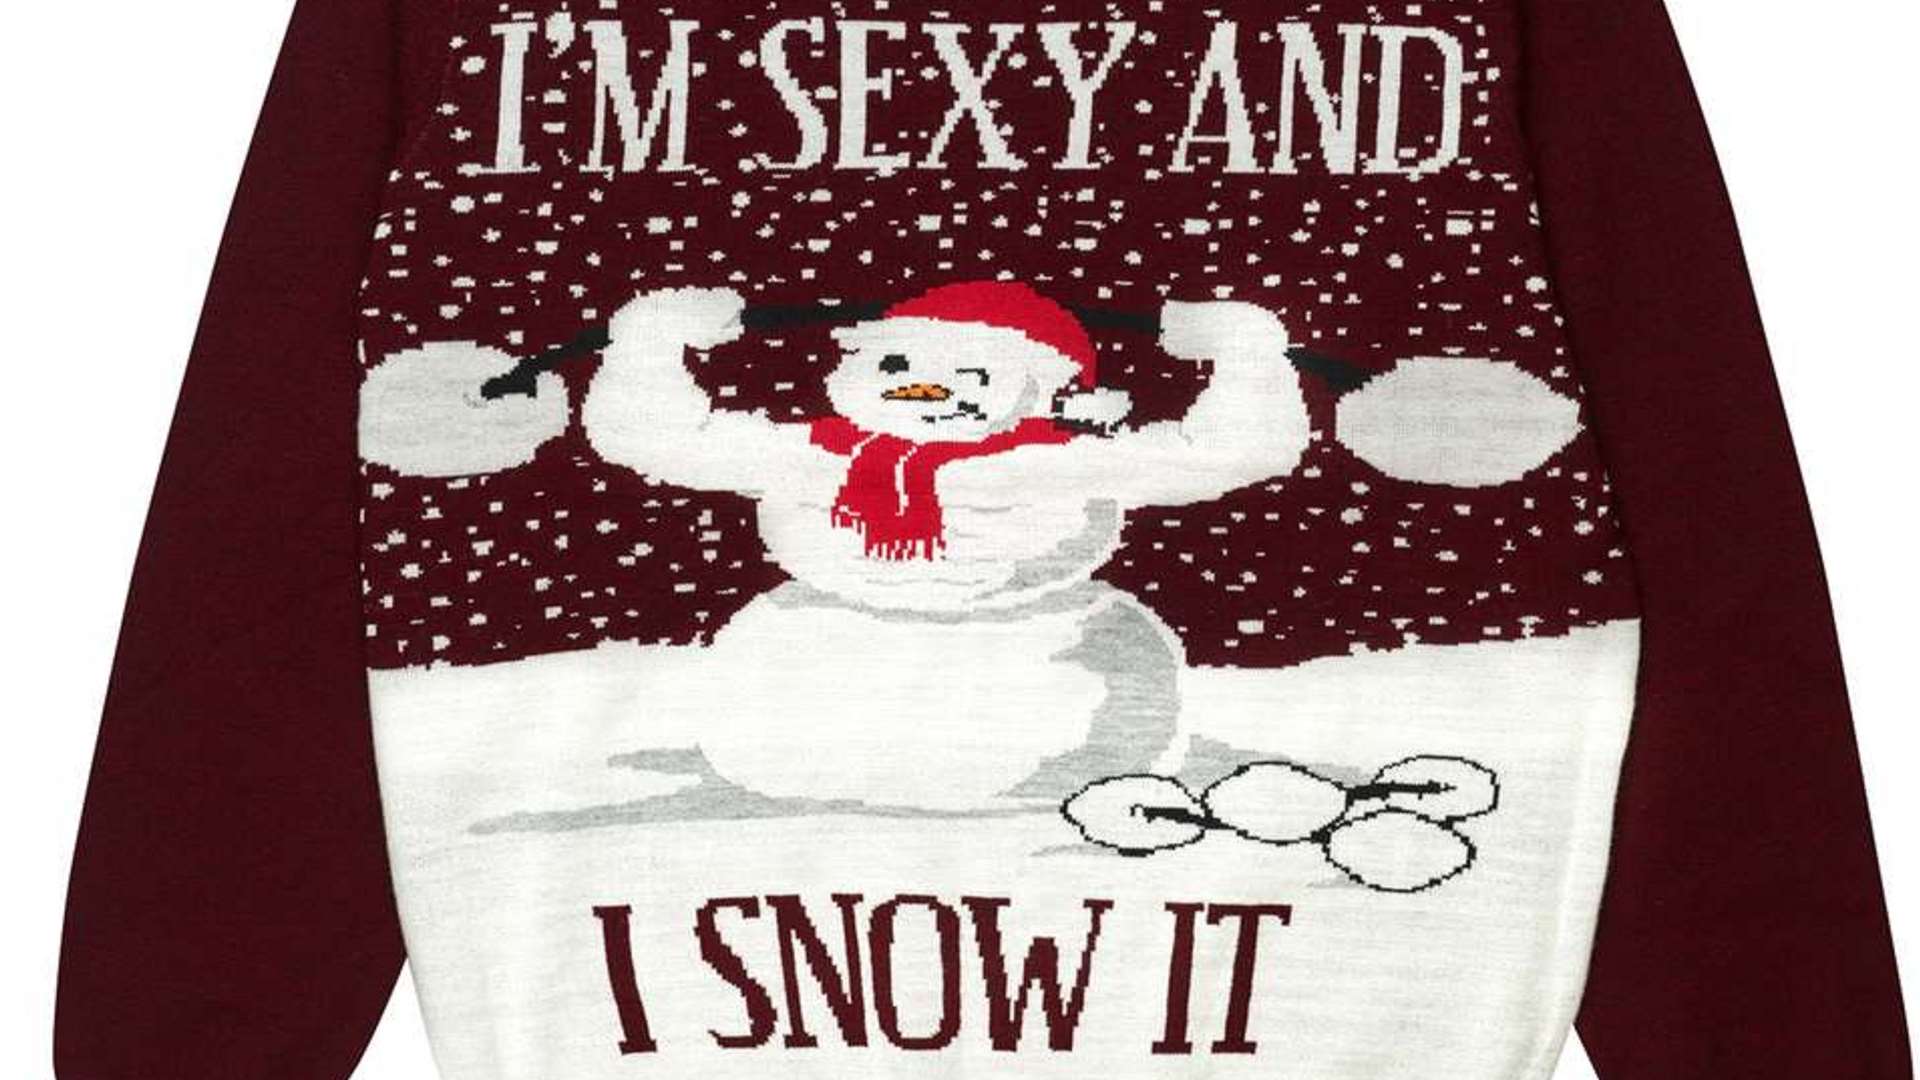 'I'm sexy and I snow it'. Picture: Burton